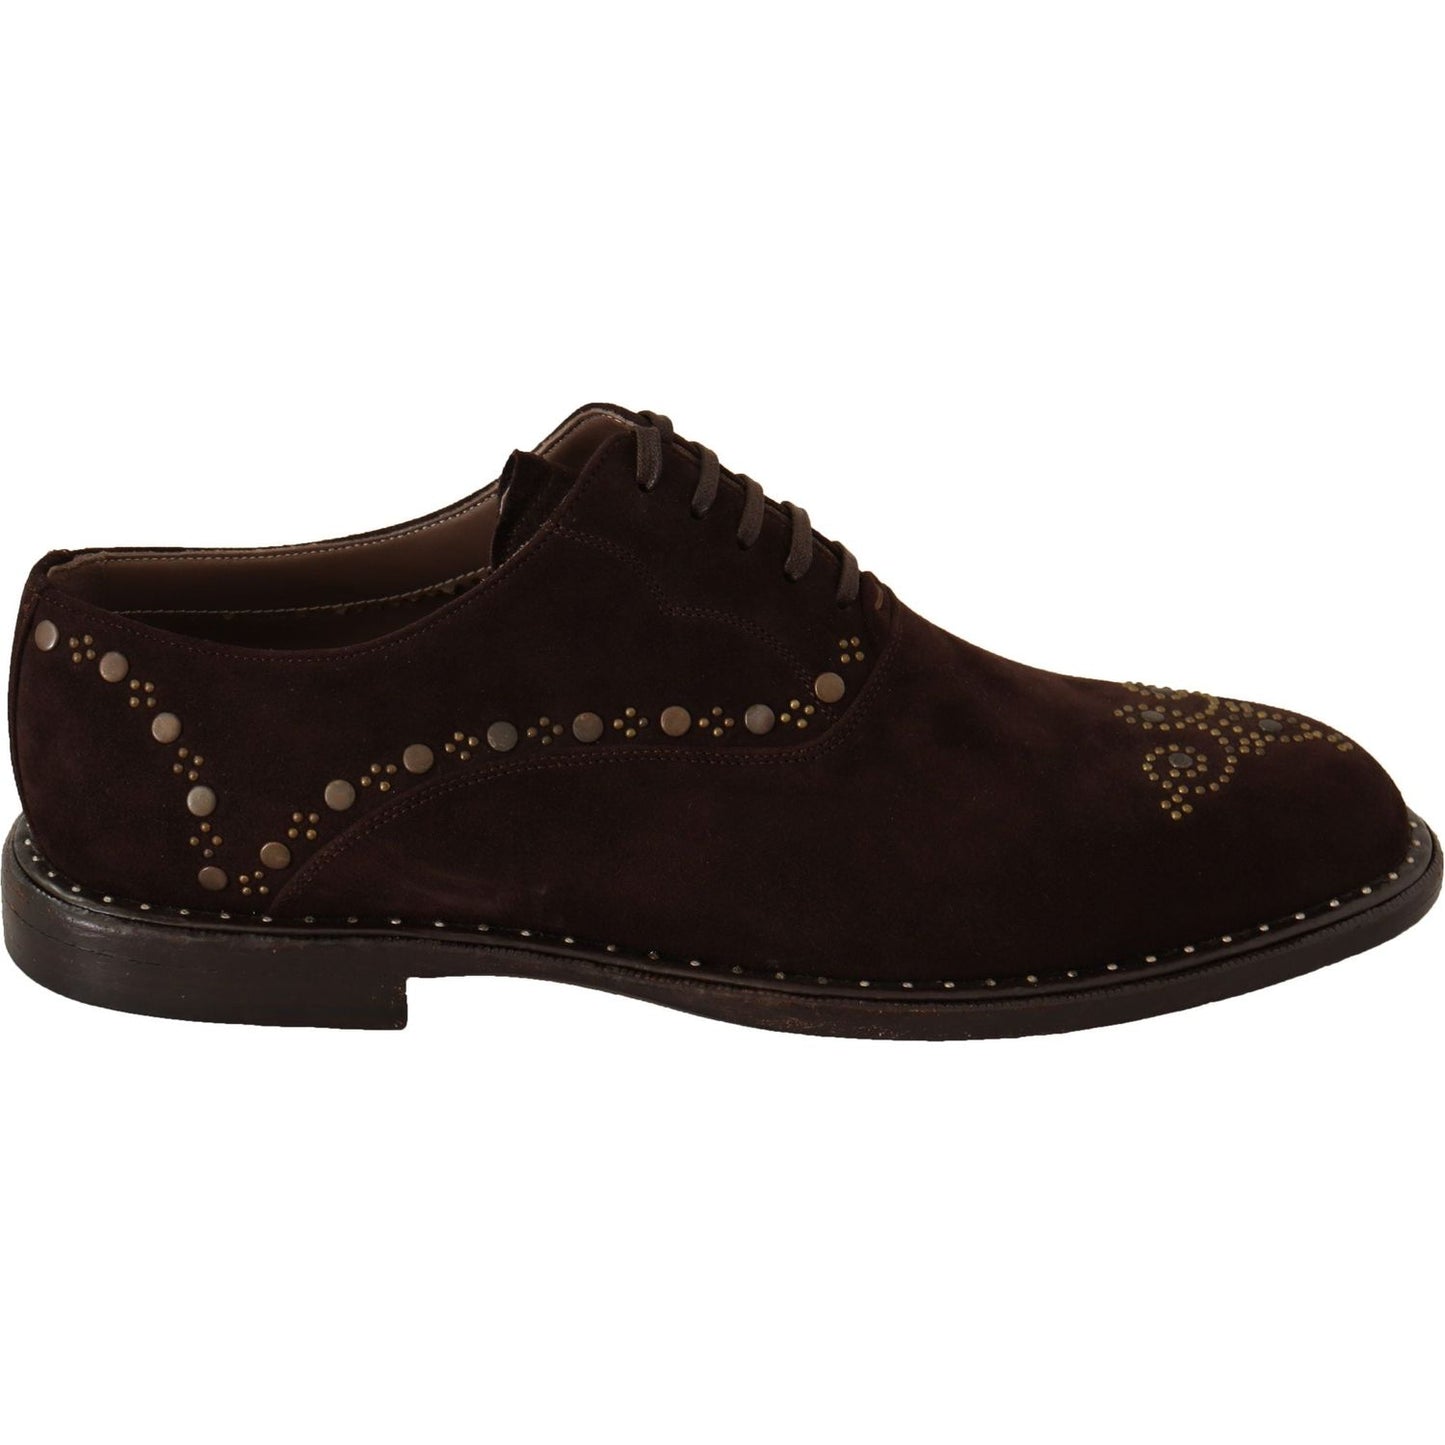 Dolce & Gabbana Elegant Brown Suede Studded Derby Shoes brown-suede-marsala-derby-studded-shoes Dress Shoes IMG_0014-scaled-c7574c16-2b9.jpg